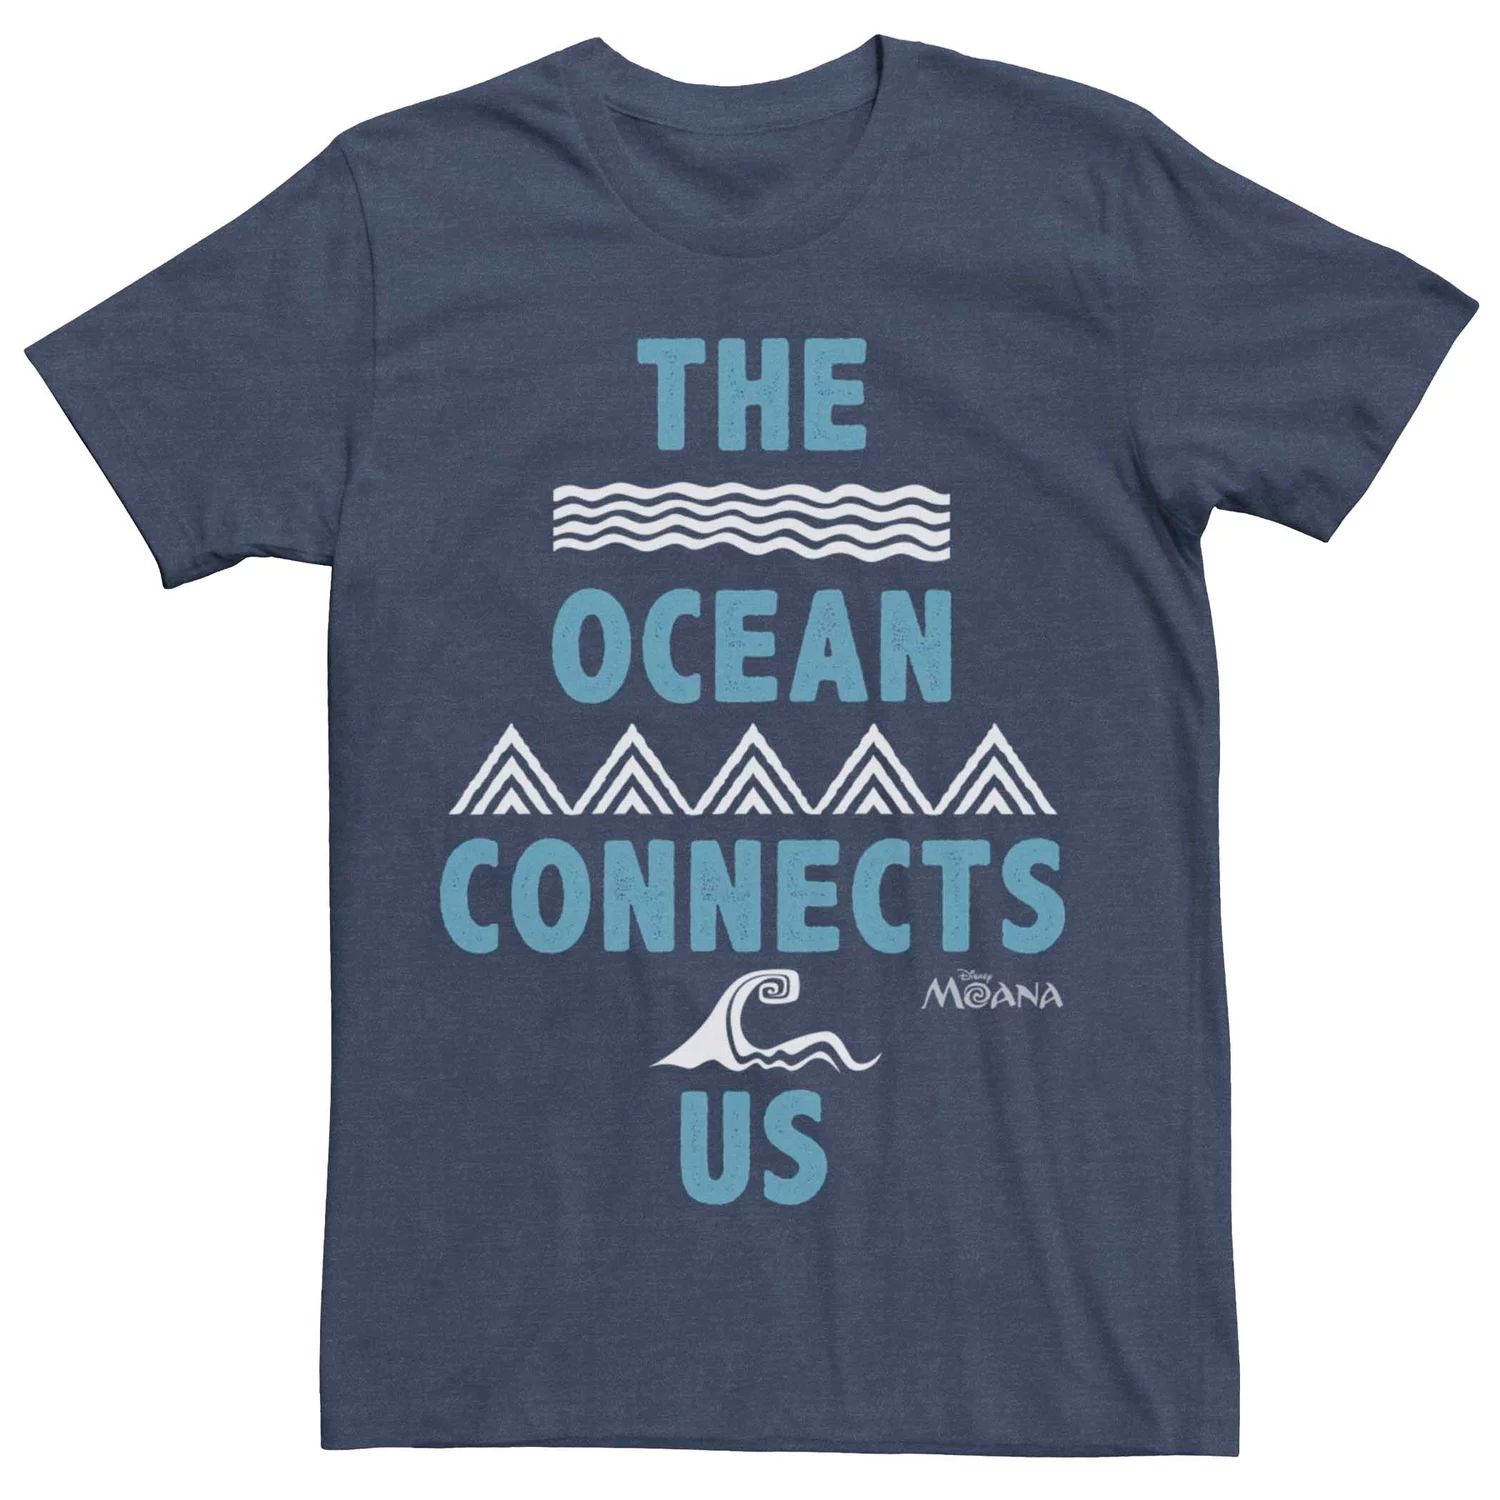 Мужская футболка Disney Moana The Ocean Connects Us Licensed Character футболка disney s moana boys 8–20 the ocean connects us с графическим рисунком кораллового цвета licensed character